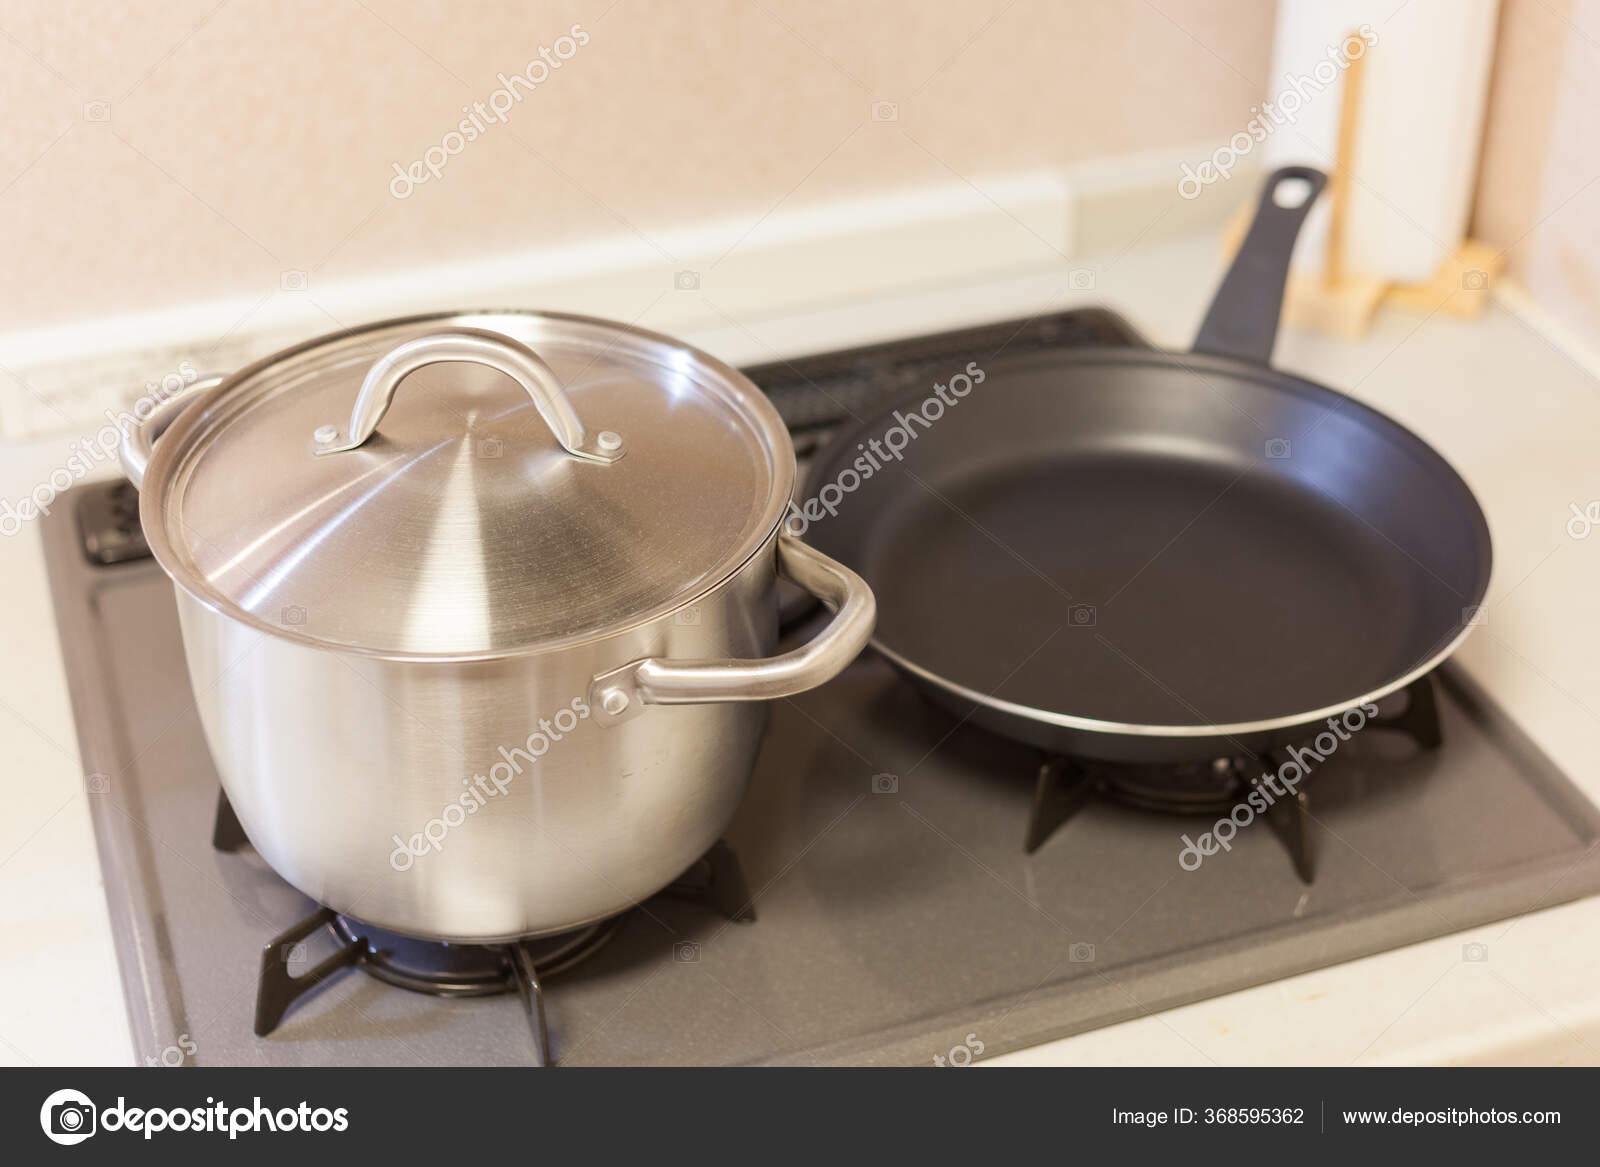 https://st3.depositphotos.com/34629226/36859/i/1600/depositphotos_368595362-stock-photo-kitchen-tools-pots-pans-set.jpg